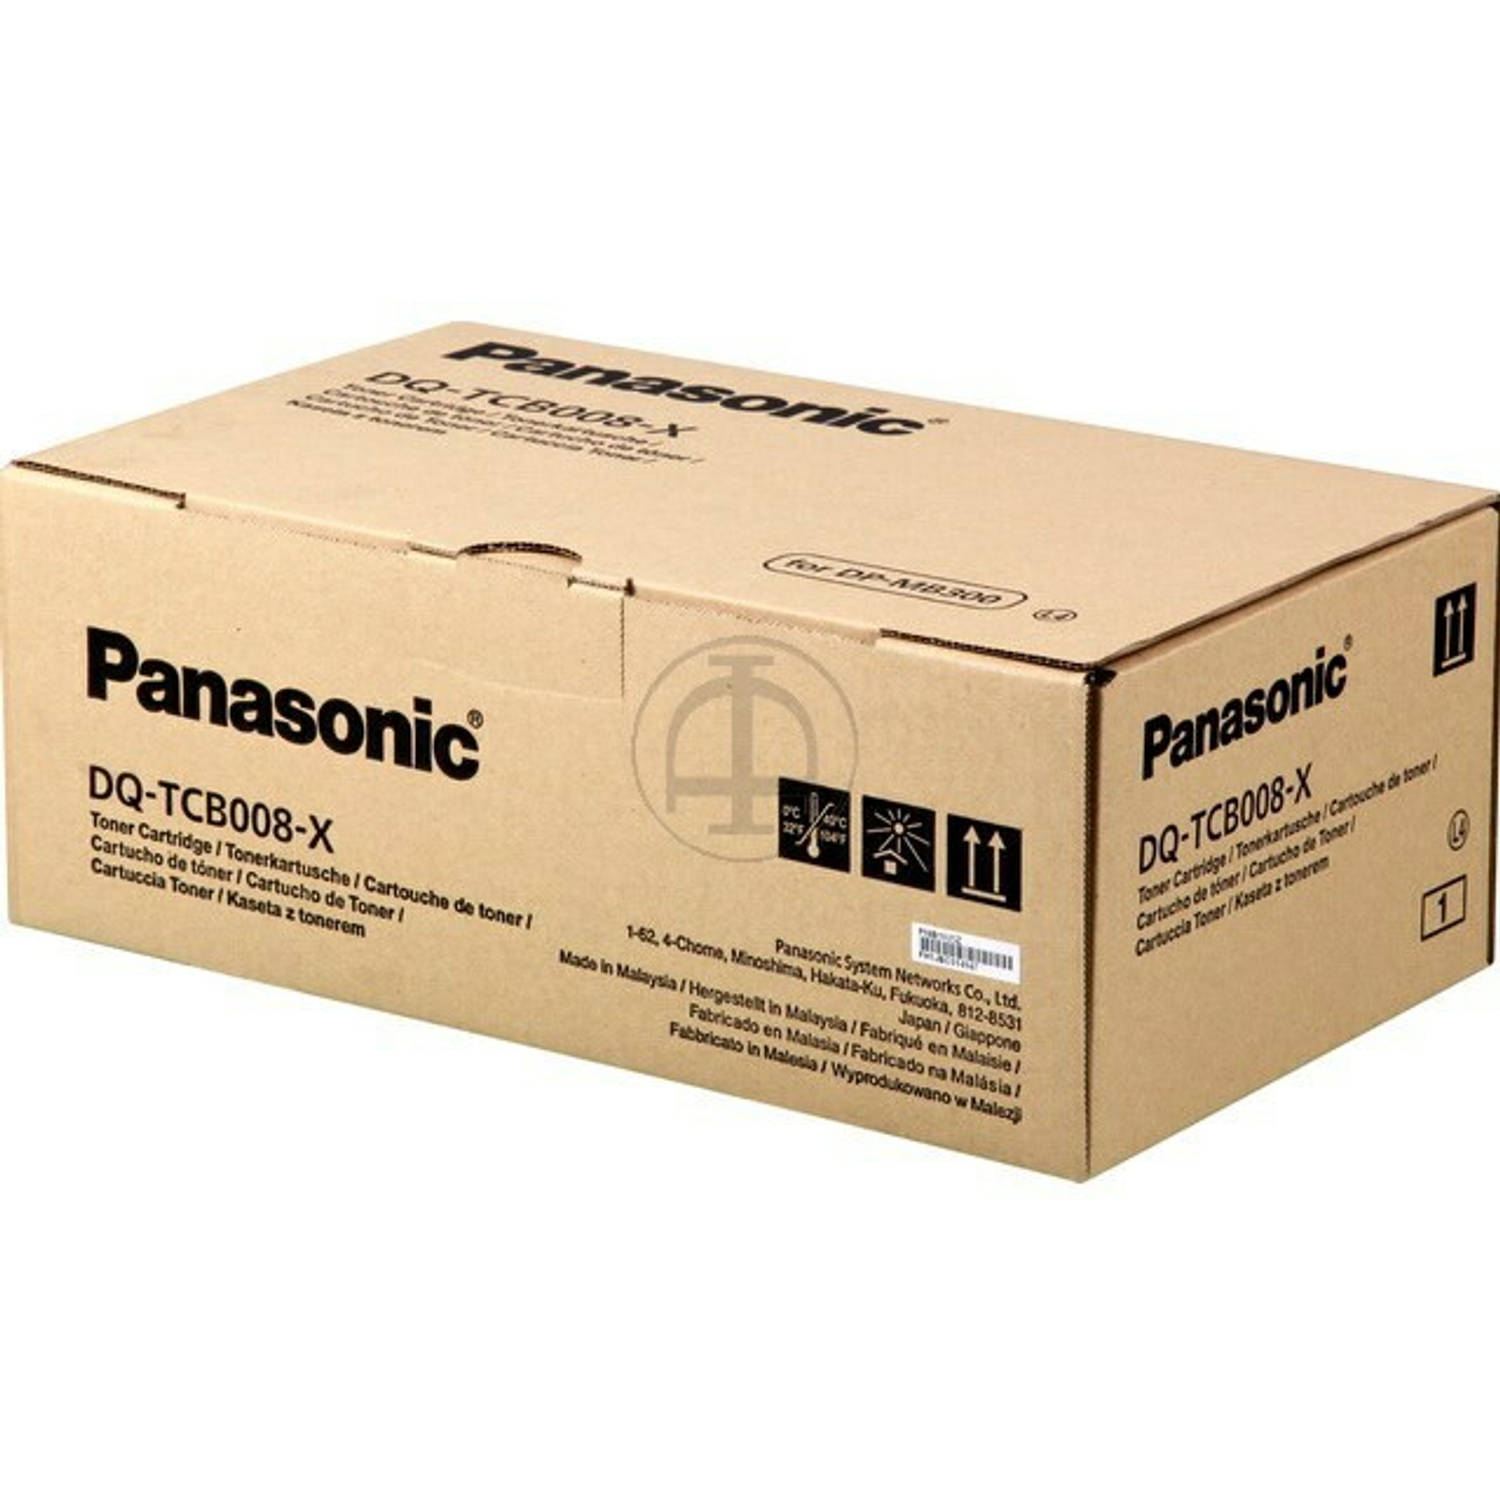 Panasonic DQ-TCB008-X